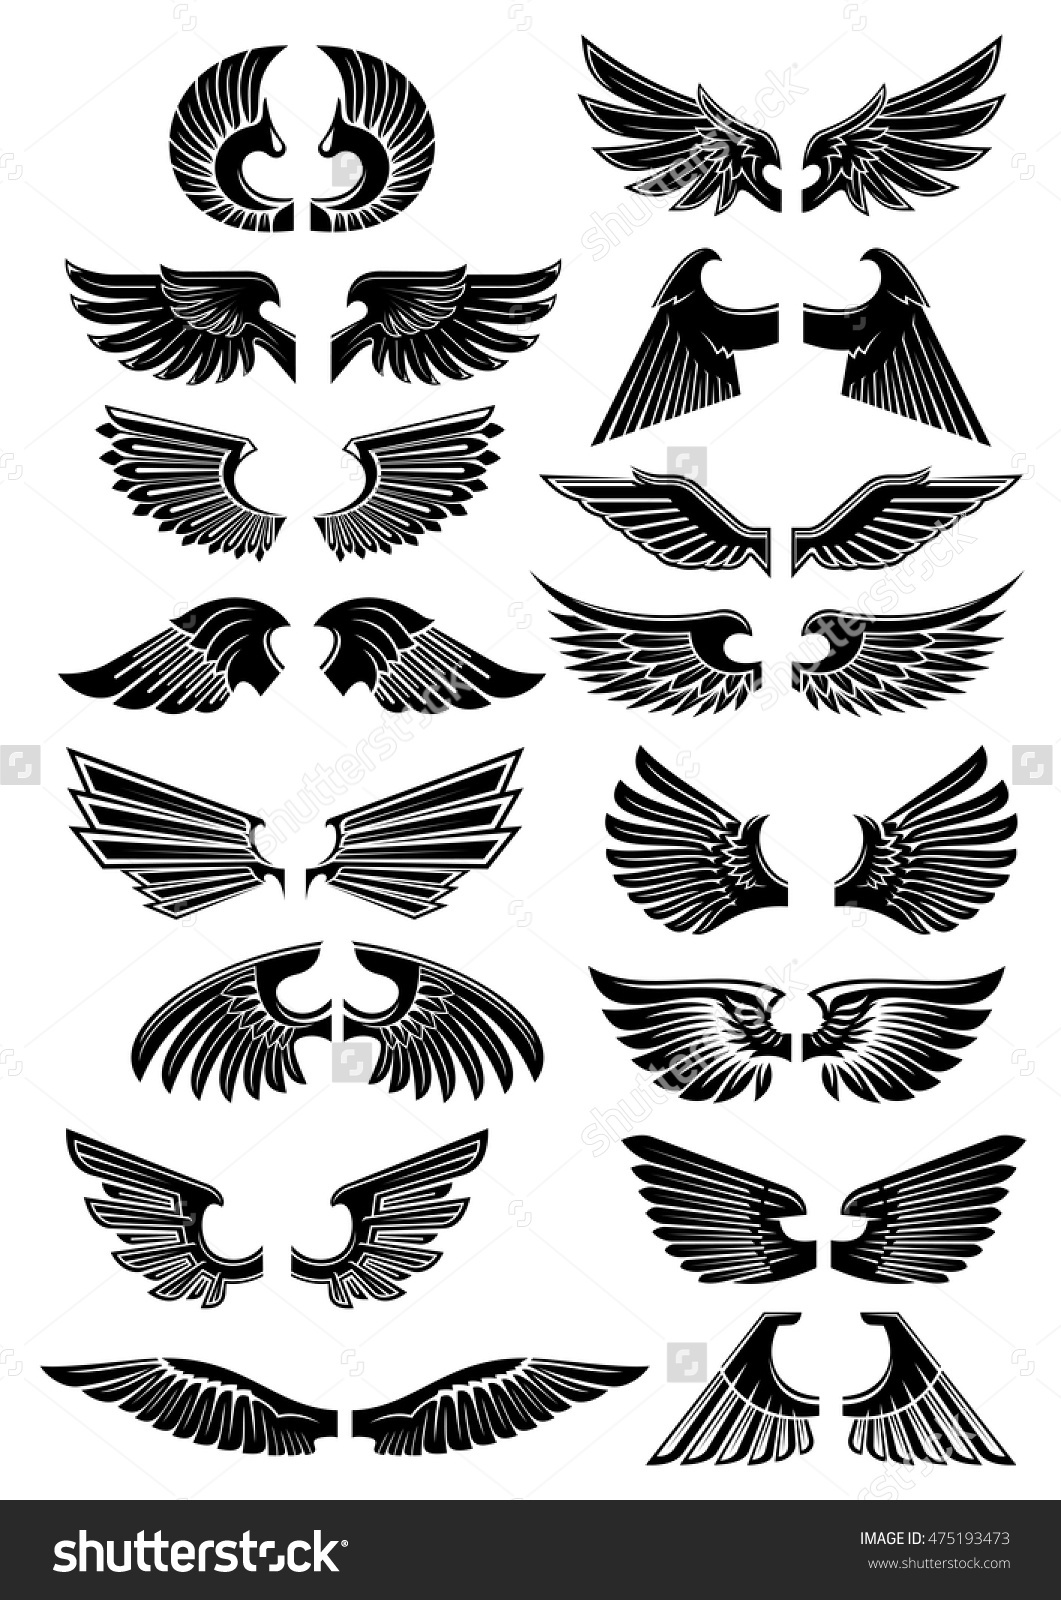 Wings Heraldic Icons Birds Angel Wings Stock Vector 475193473.